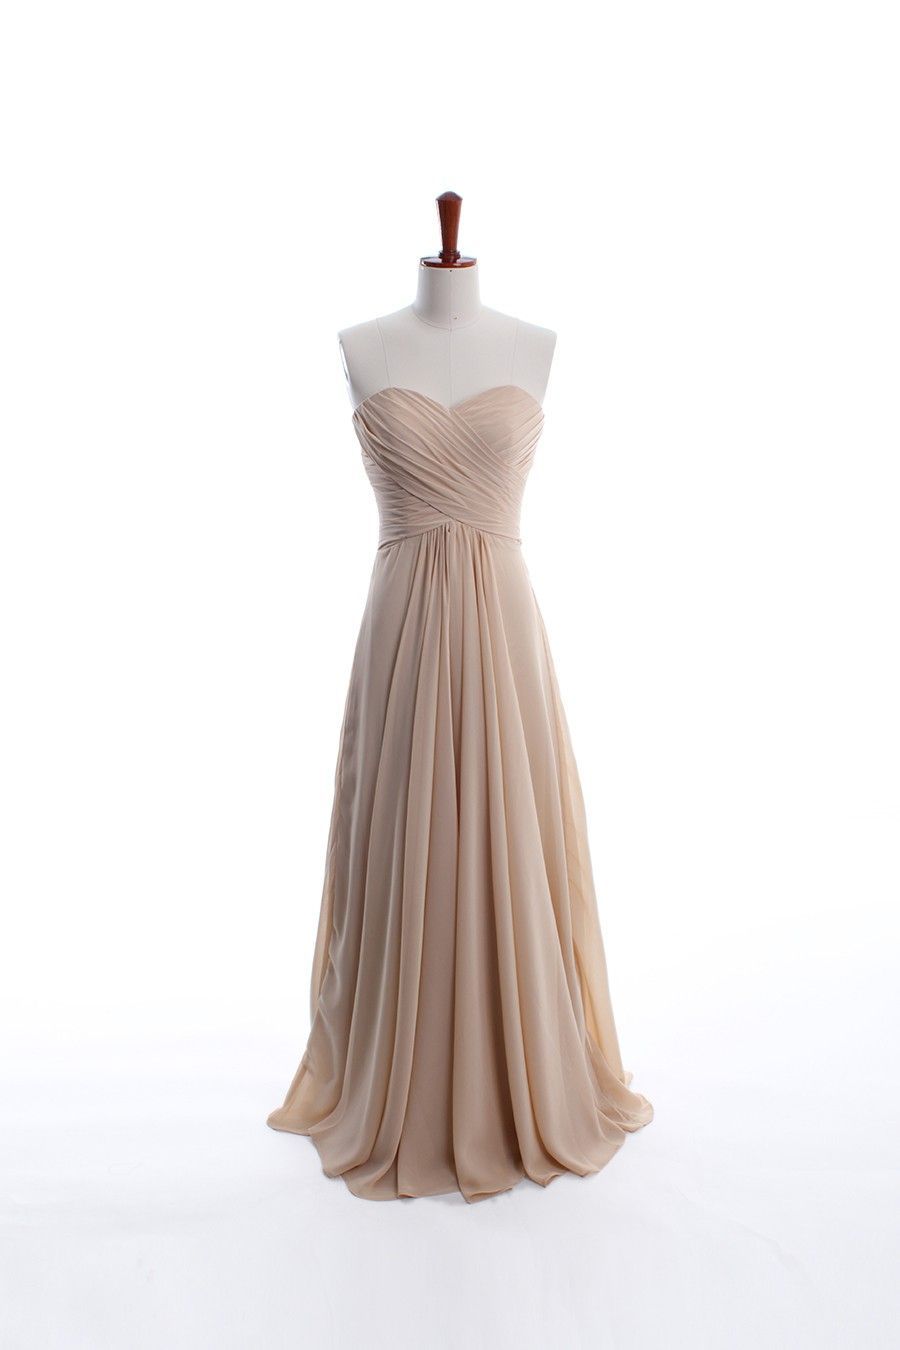 Fashionable A-line empire waist chiffon dress for bridesmaid $196.00